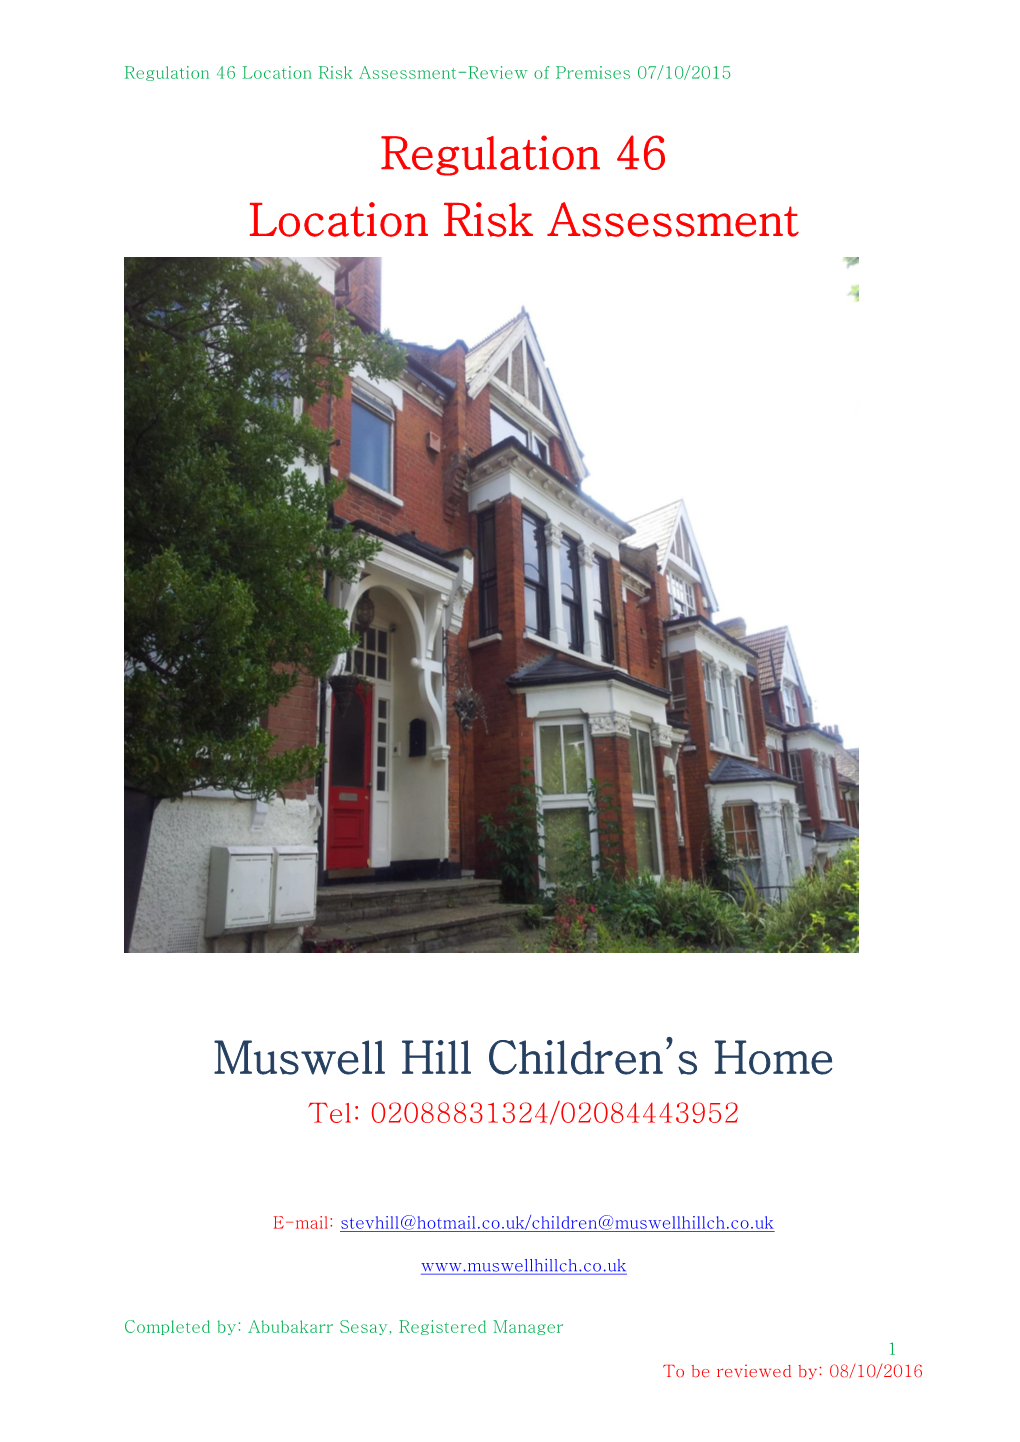 Regulation 46 Location Risk Assessment Muswell Hill Children's